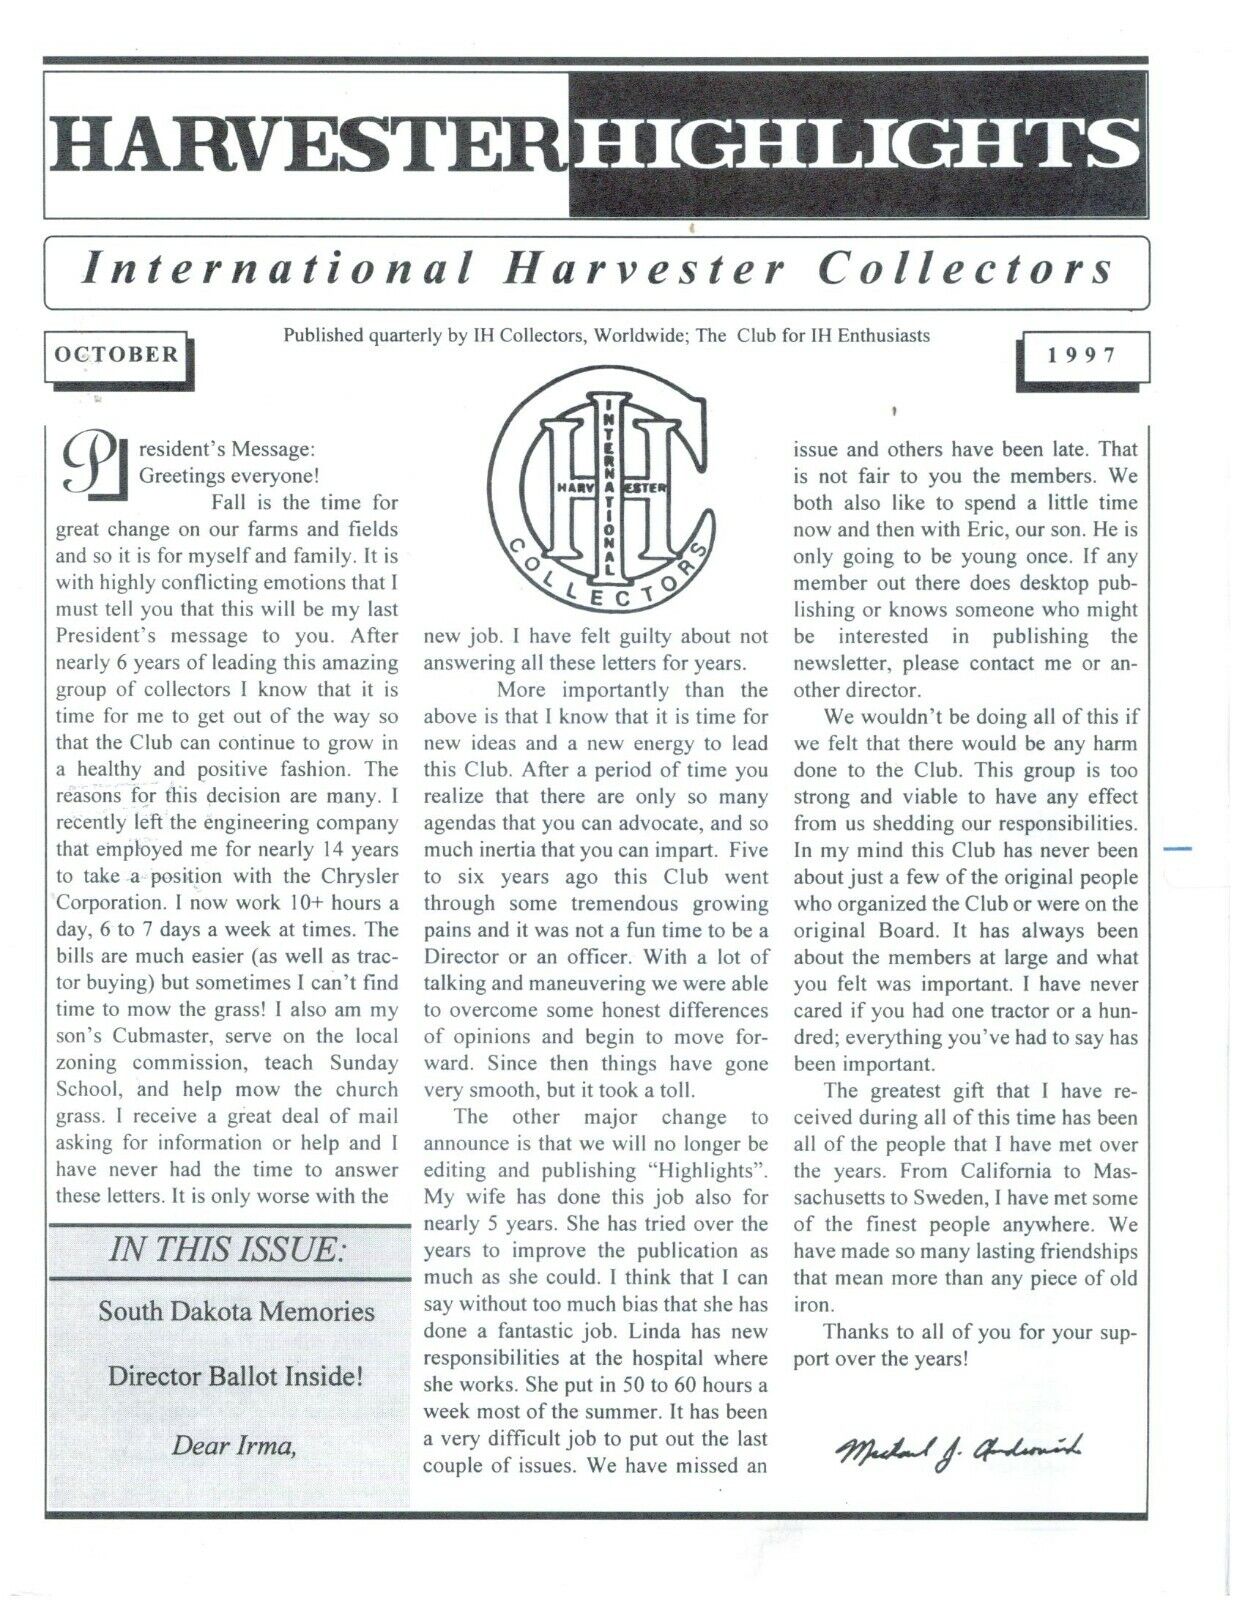 October 1997 International Harvester Highlights, 1915 Model E IHC High Wheeler